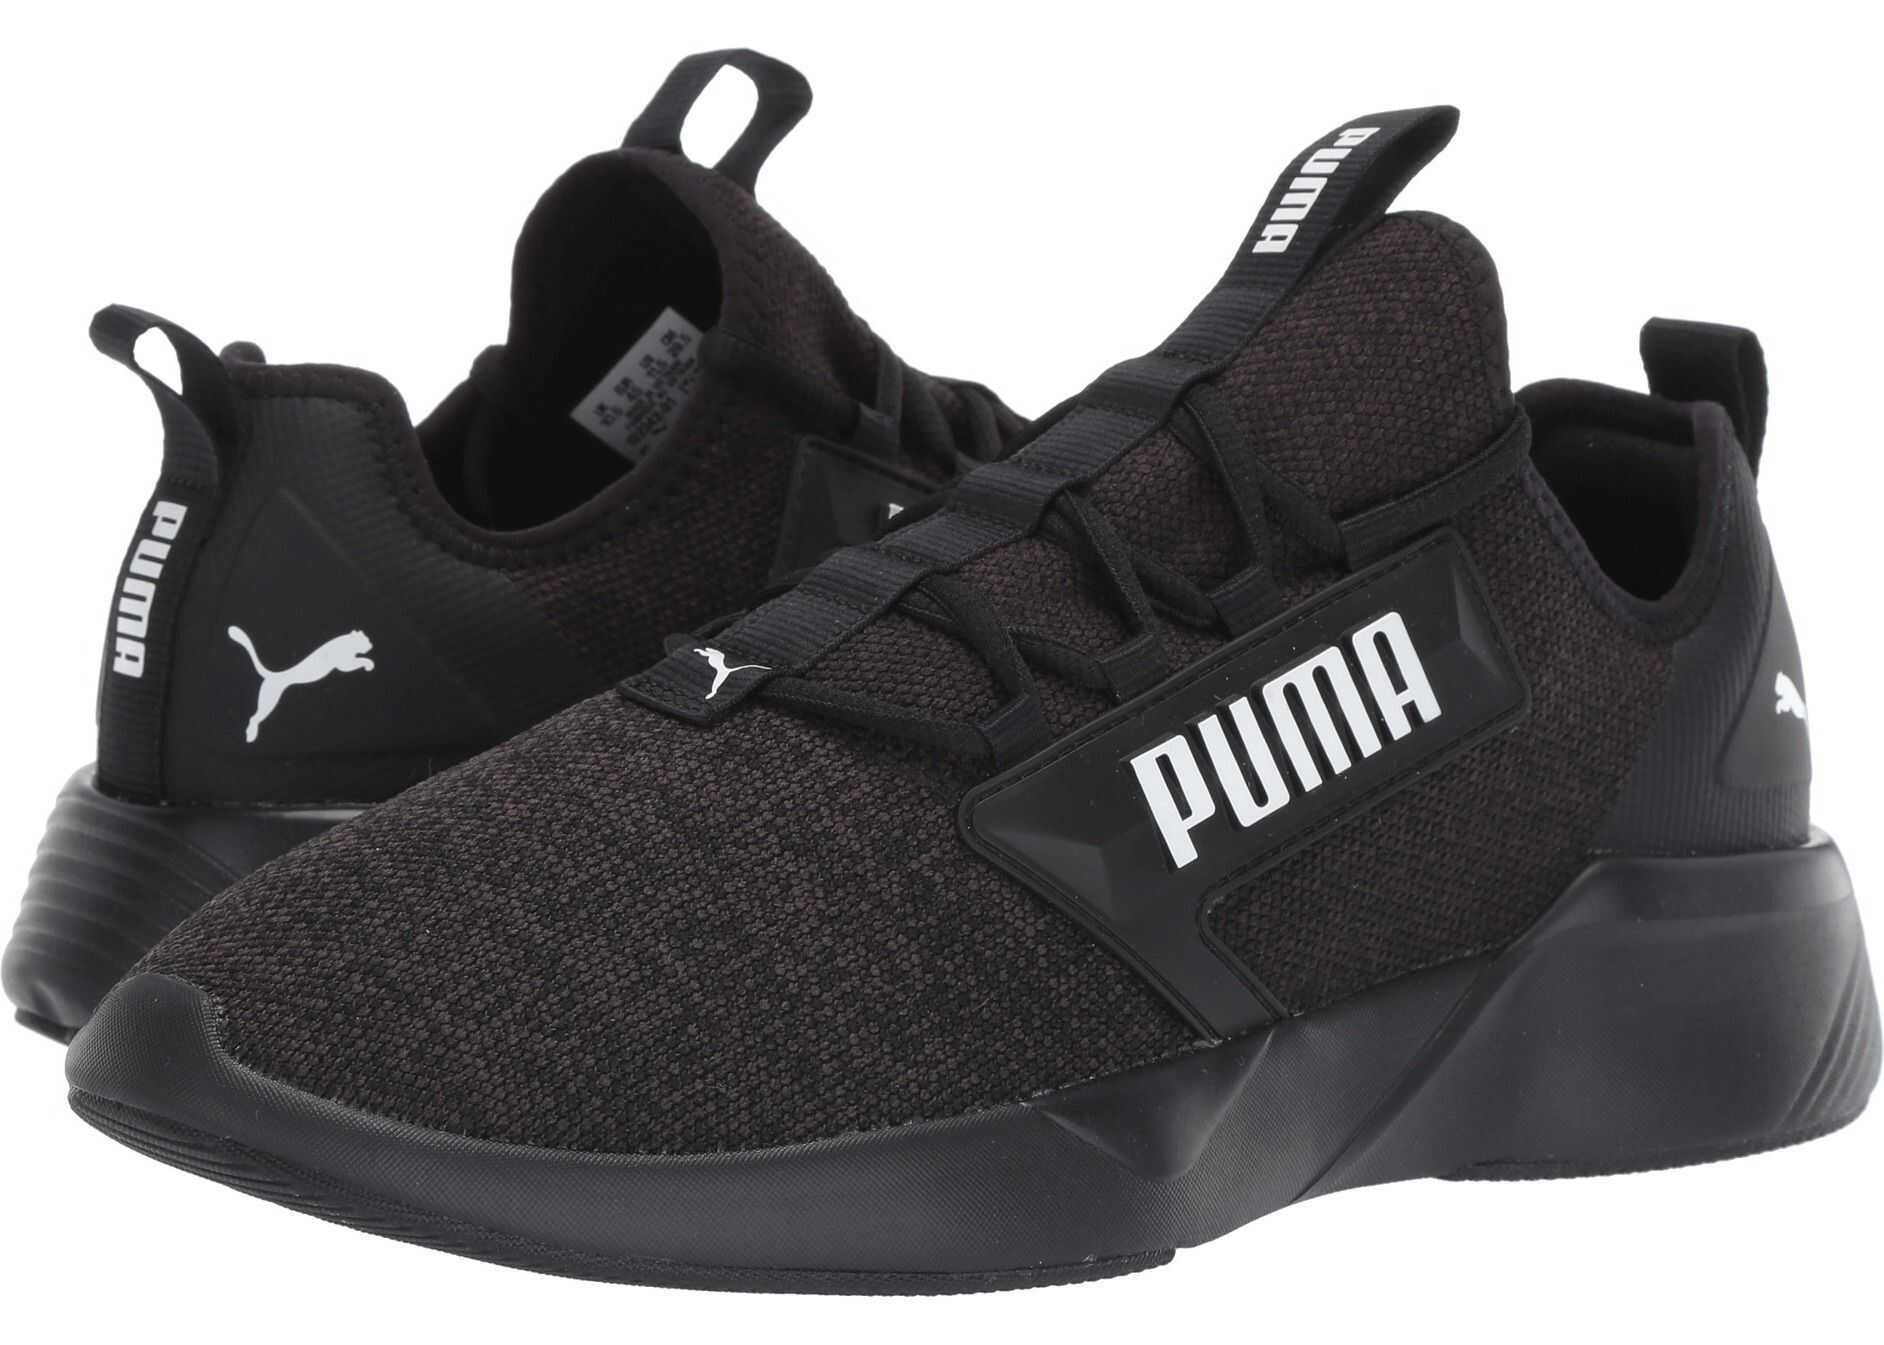 PUMA Retaliate Knit Puma Black/Puma White